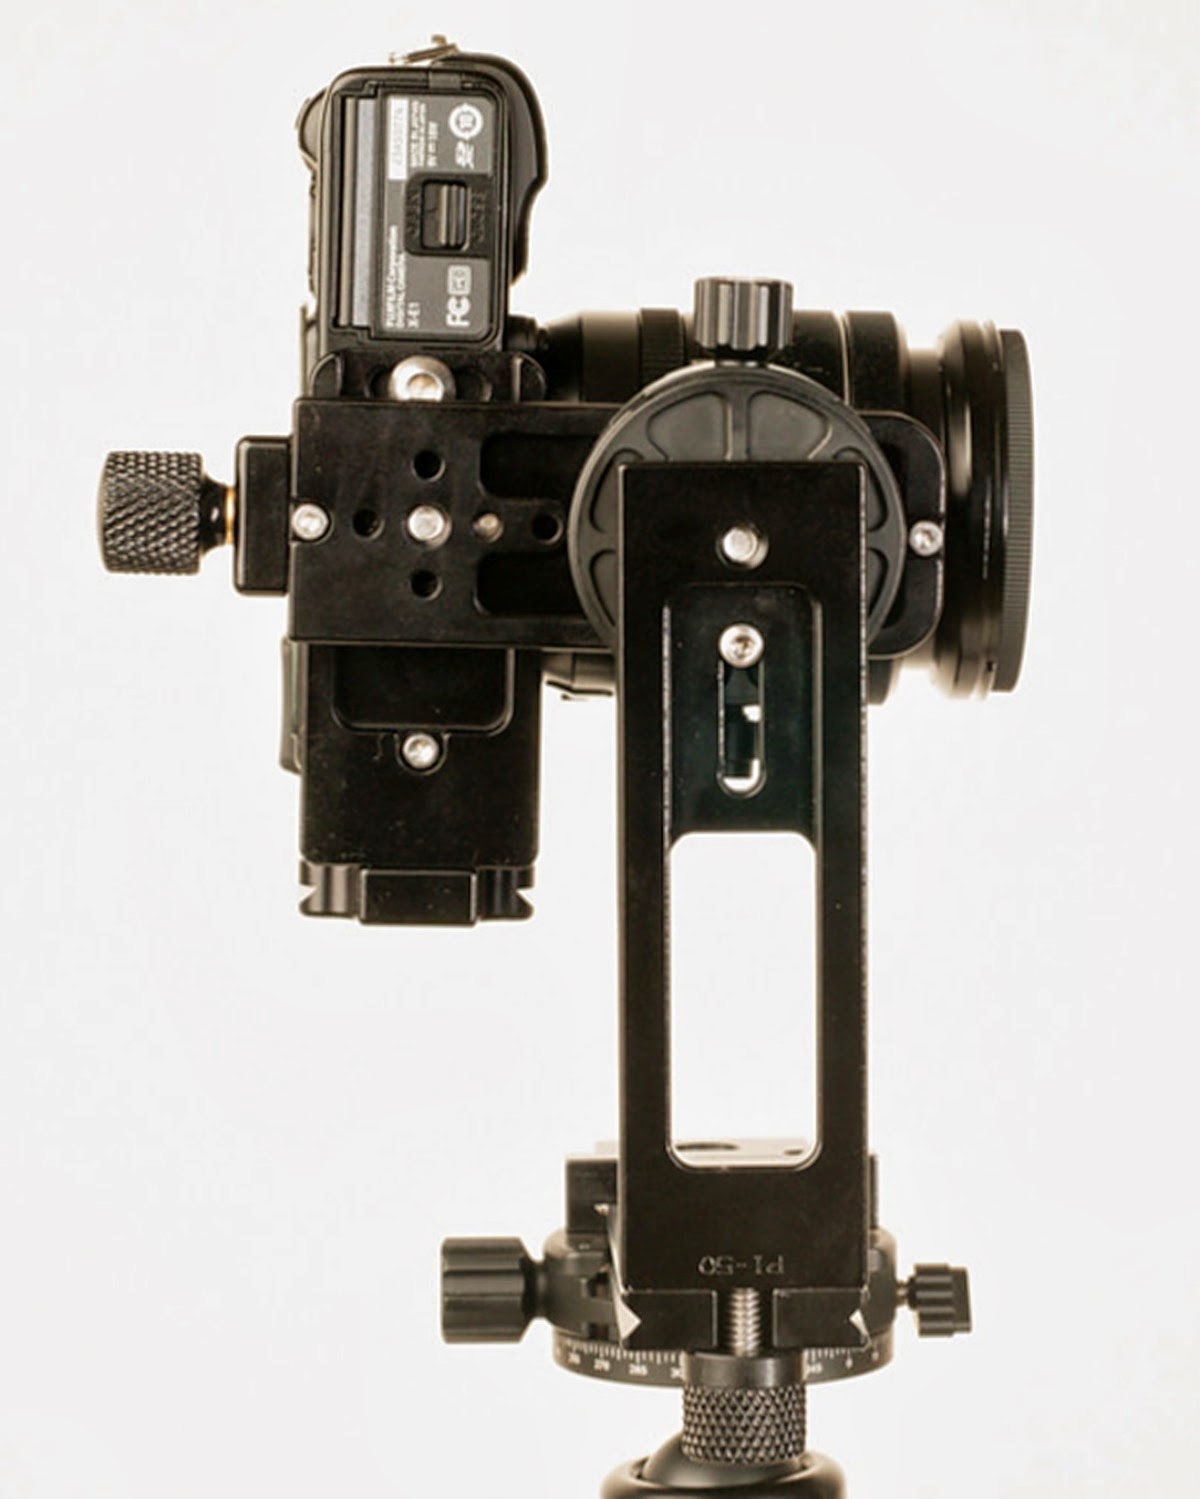 Fujifilm X-E1 mounted on Hejnar 4/3 Quick Connect Set - Horizontal